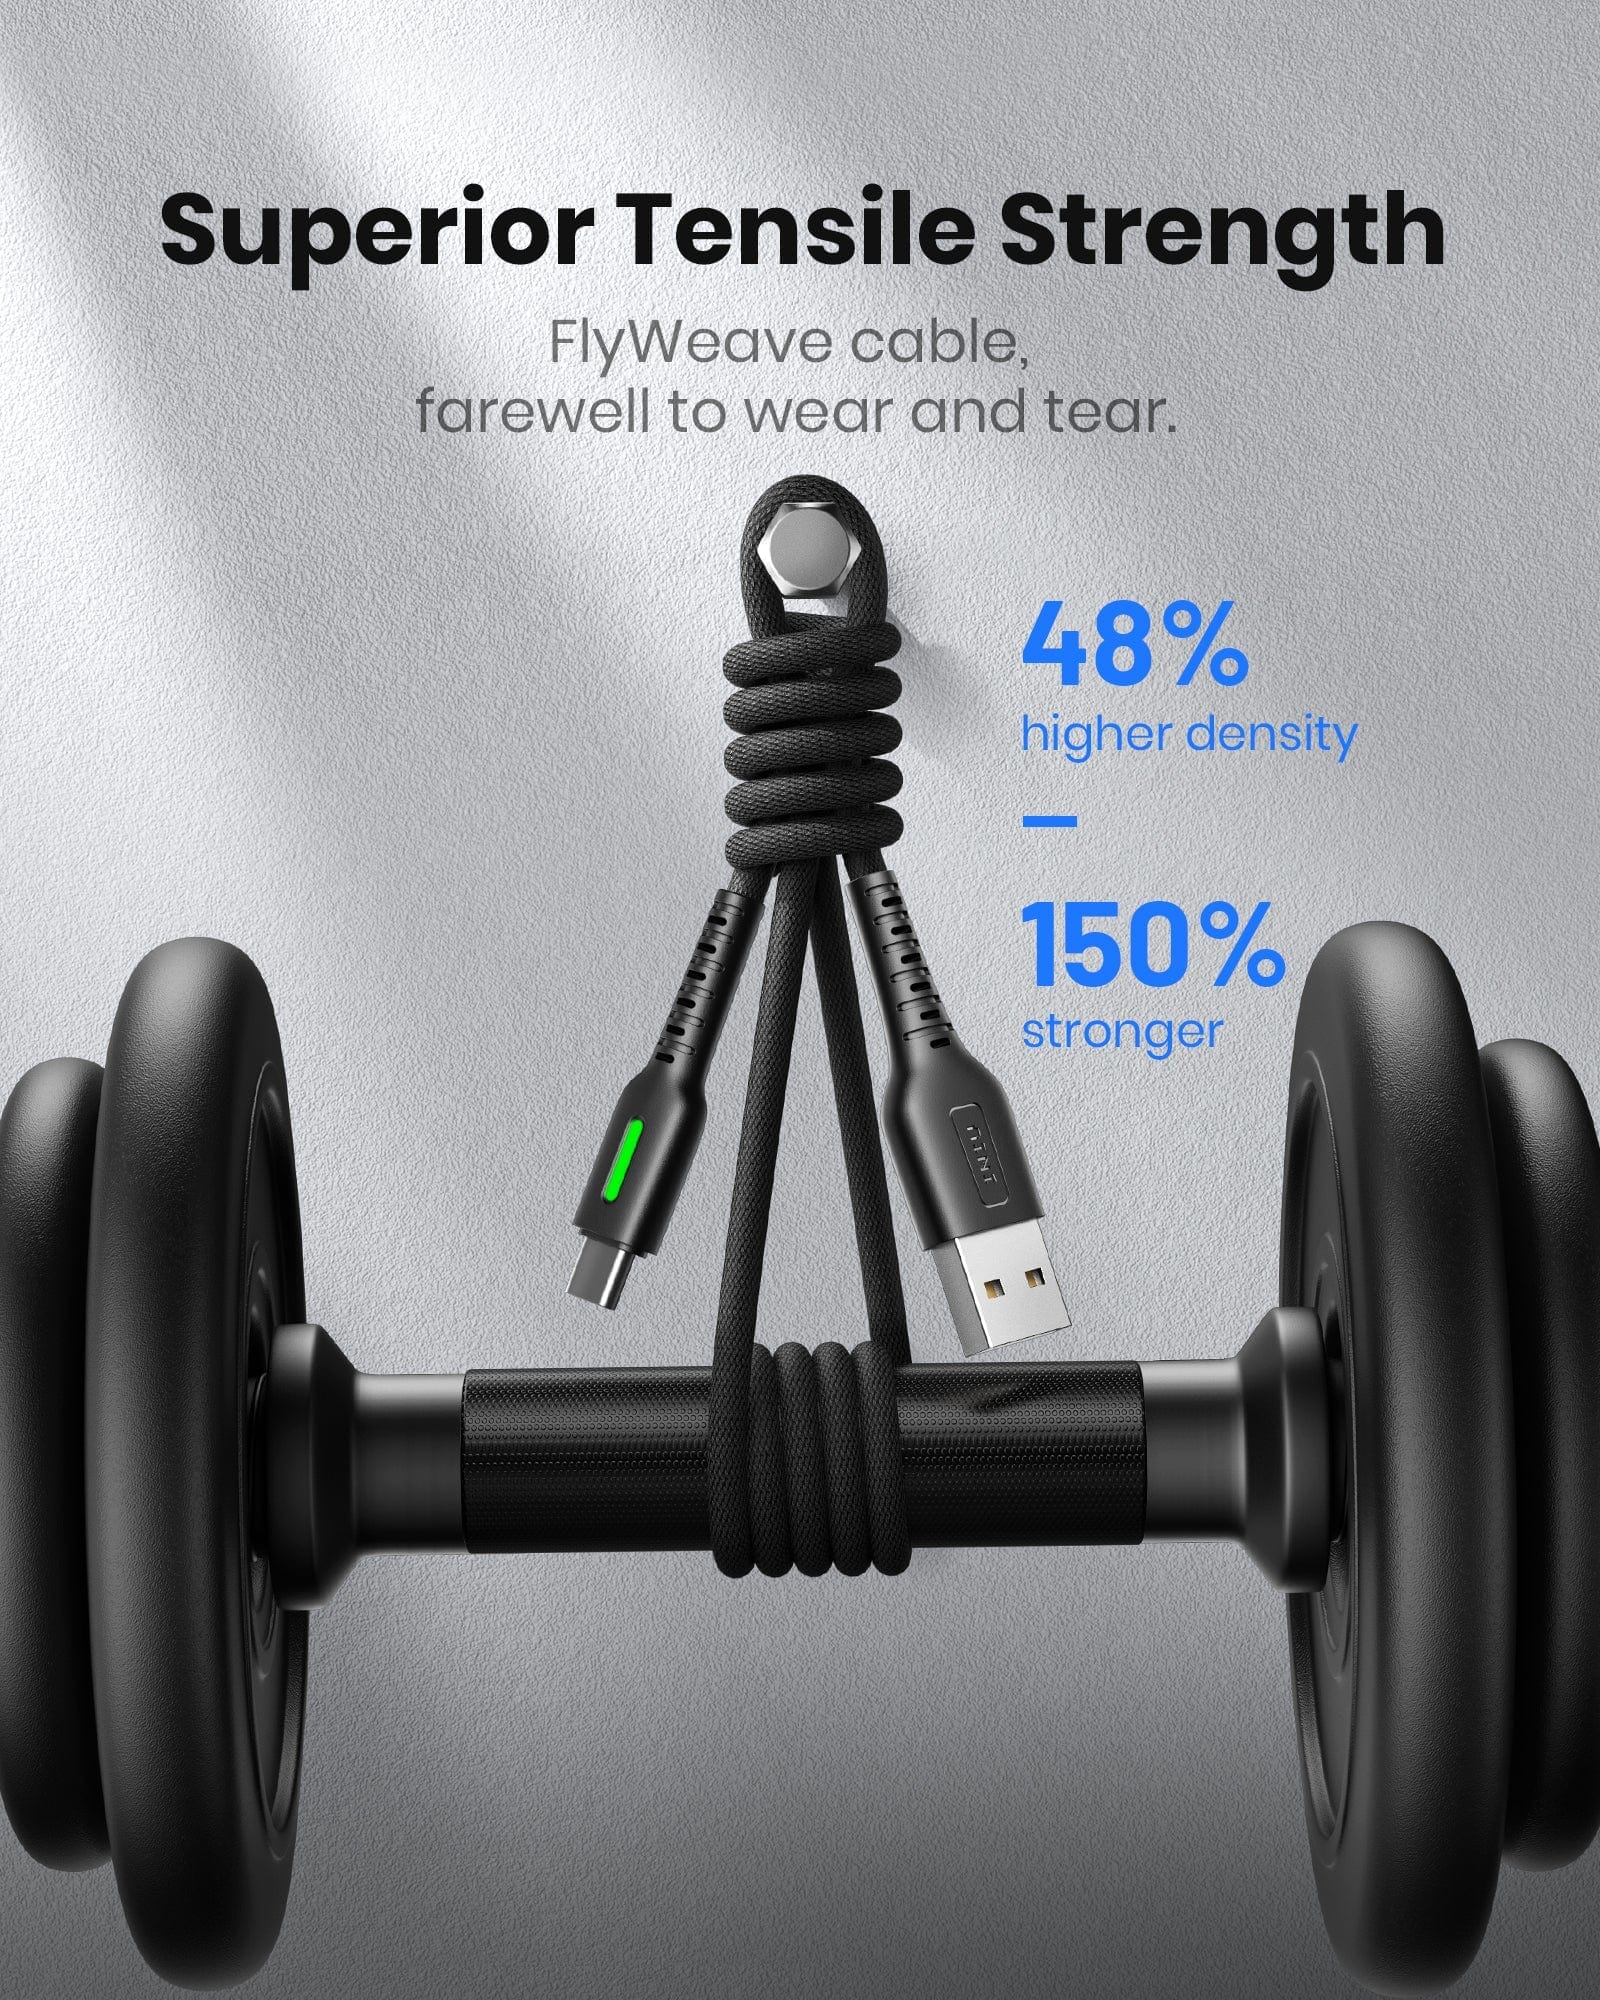 Superior Tensile Strength